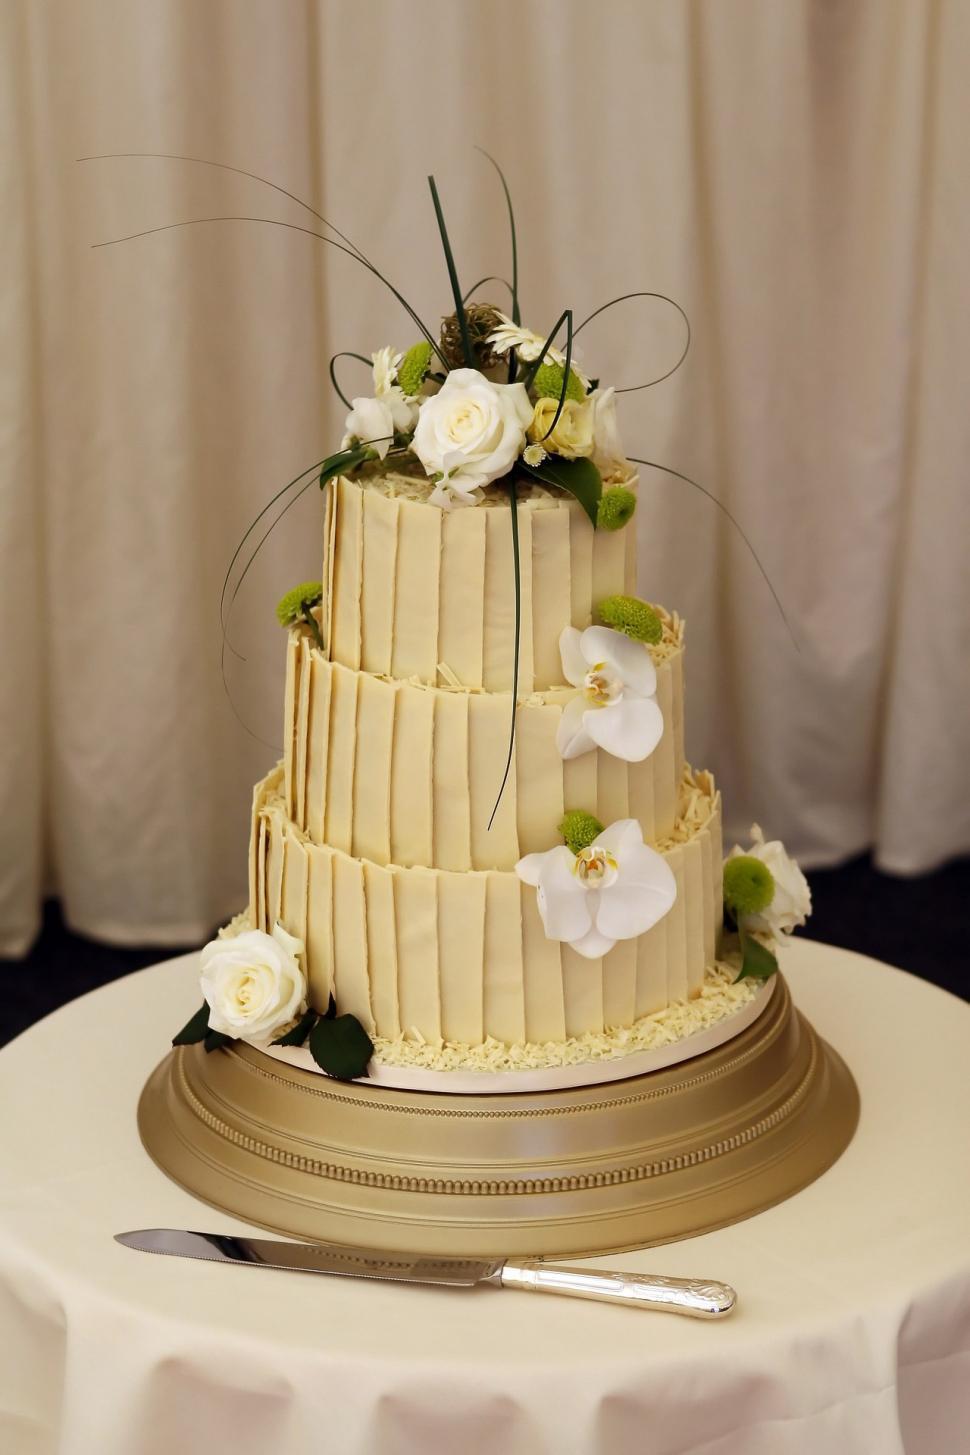 Free Image of Elegant Wedding Cake With White Flowers on Table 